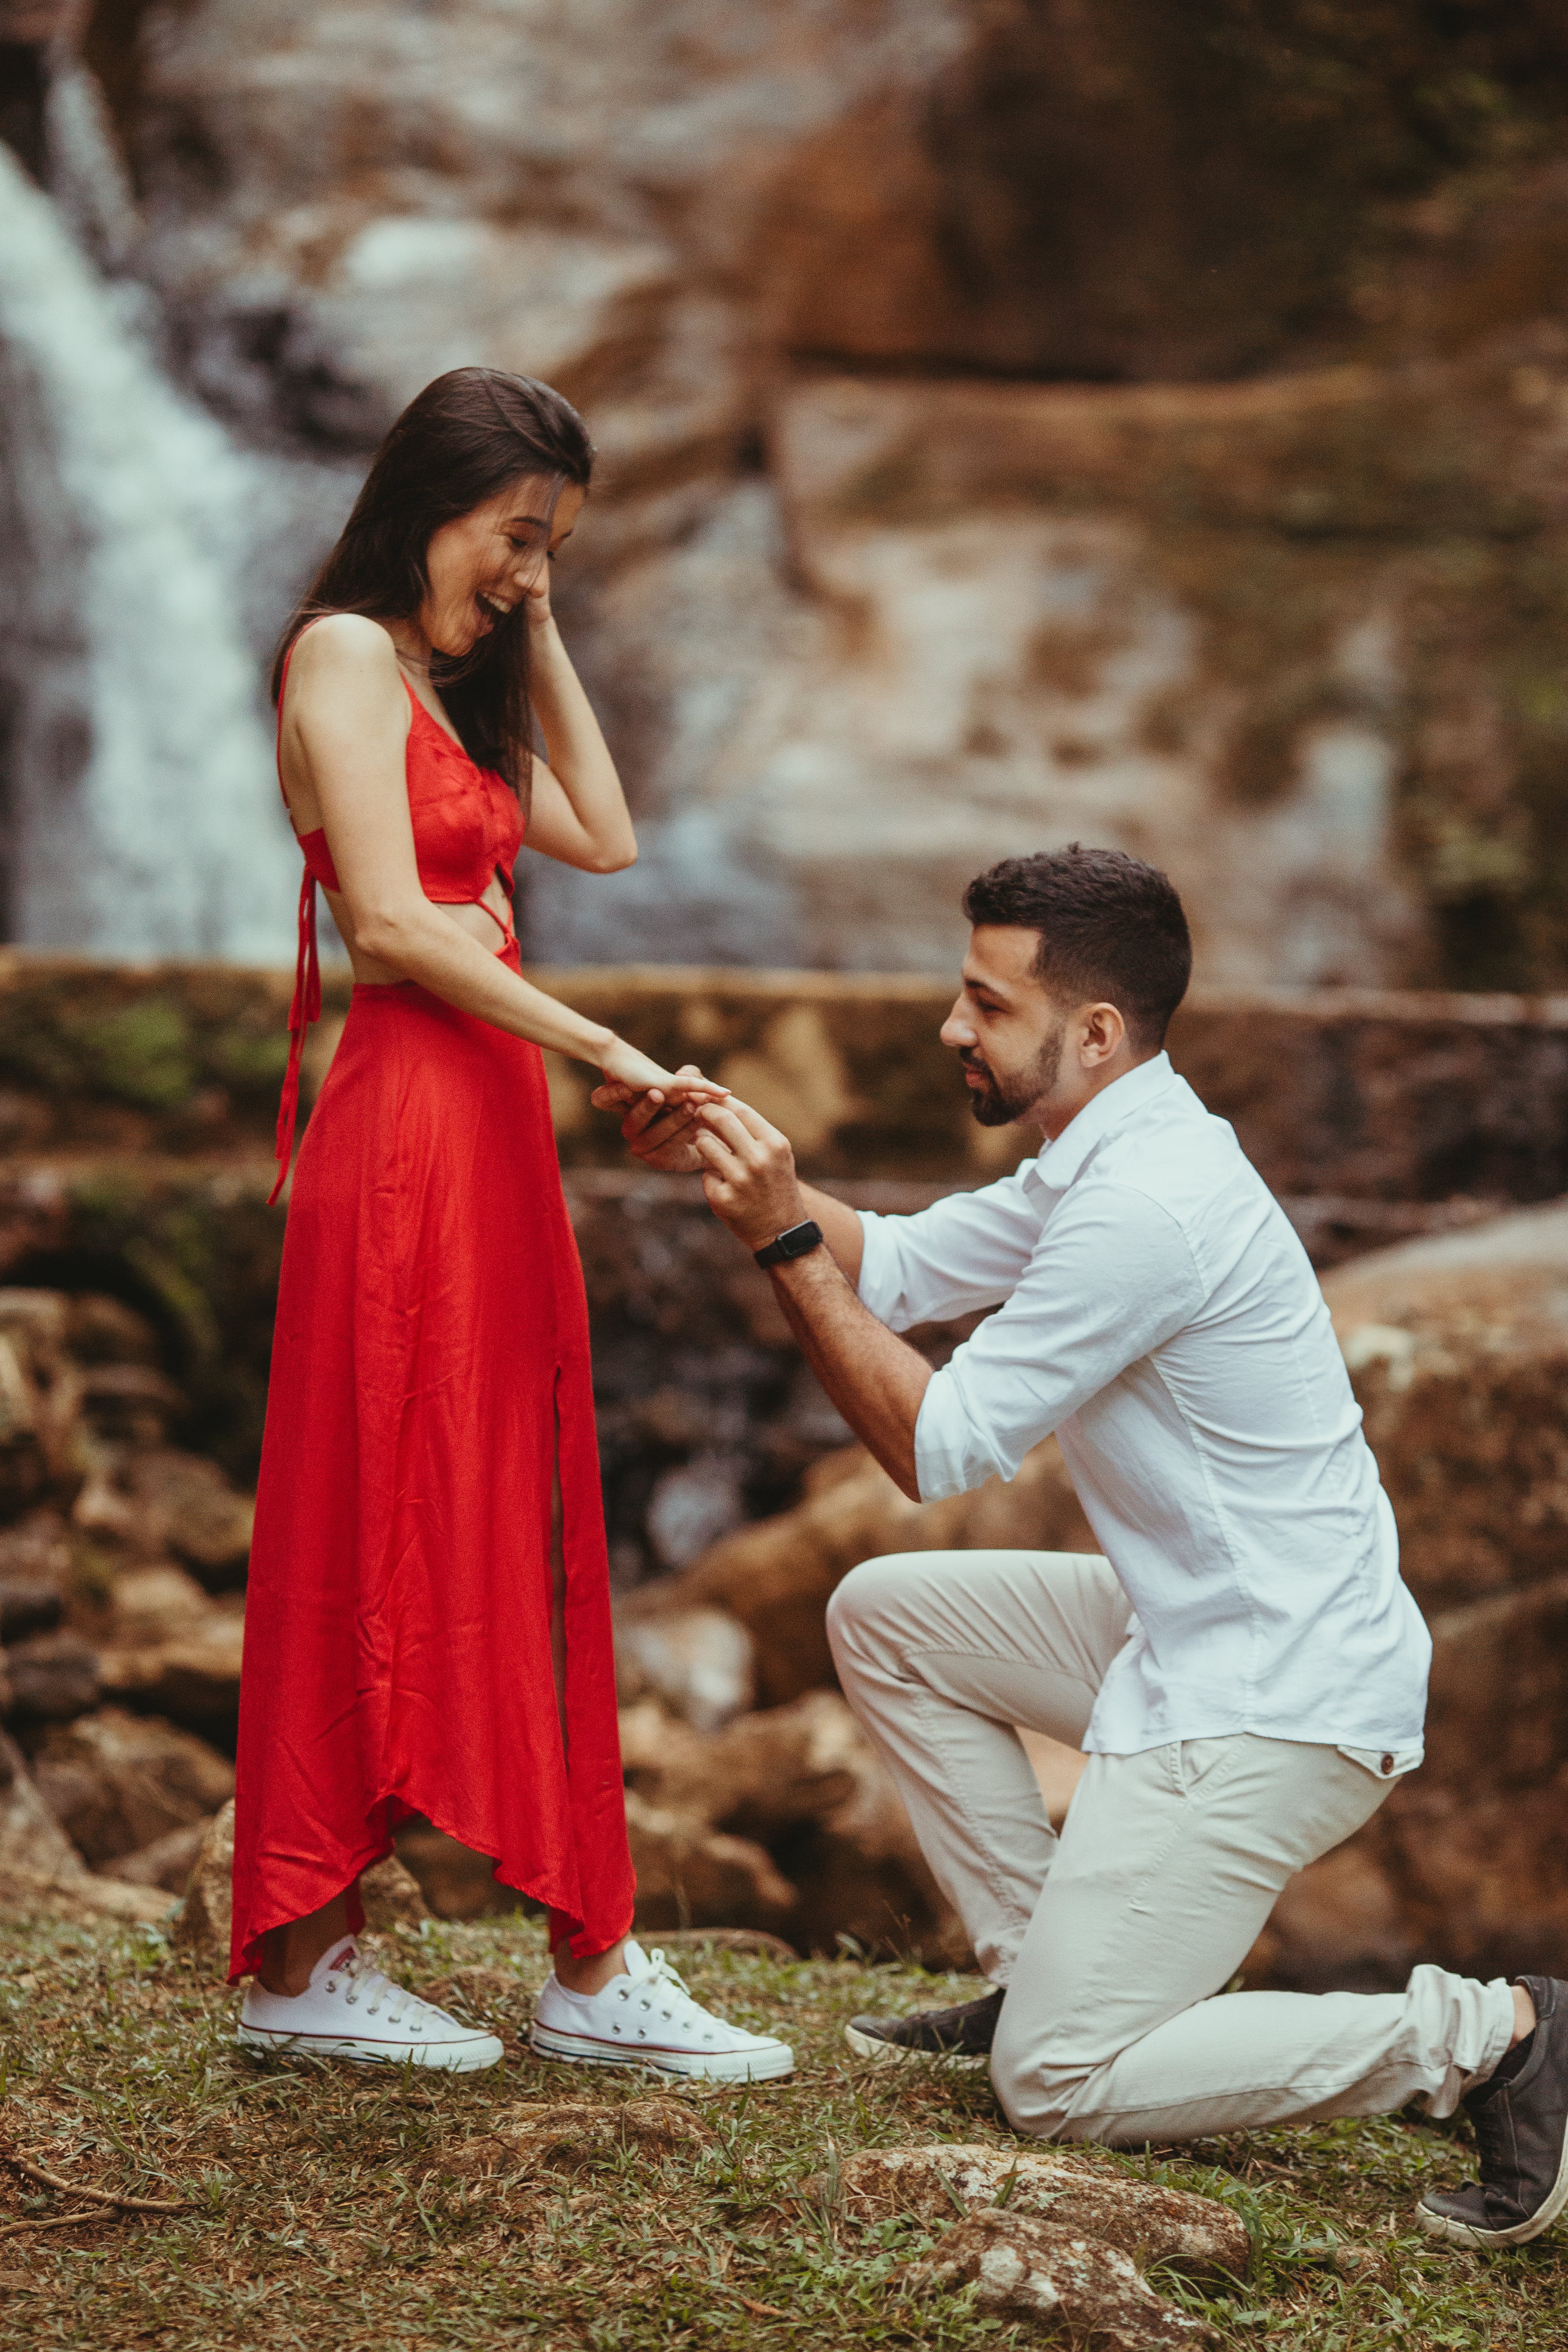 A man proposing to a woman | Source: Pexels